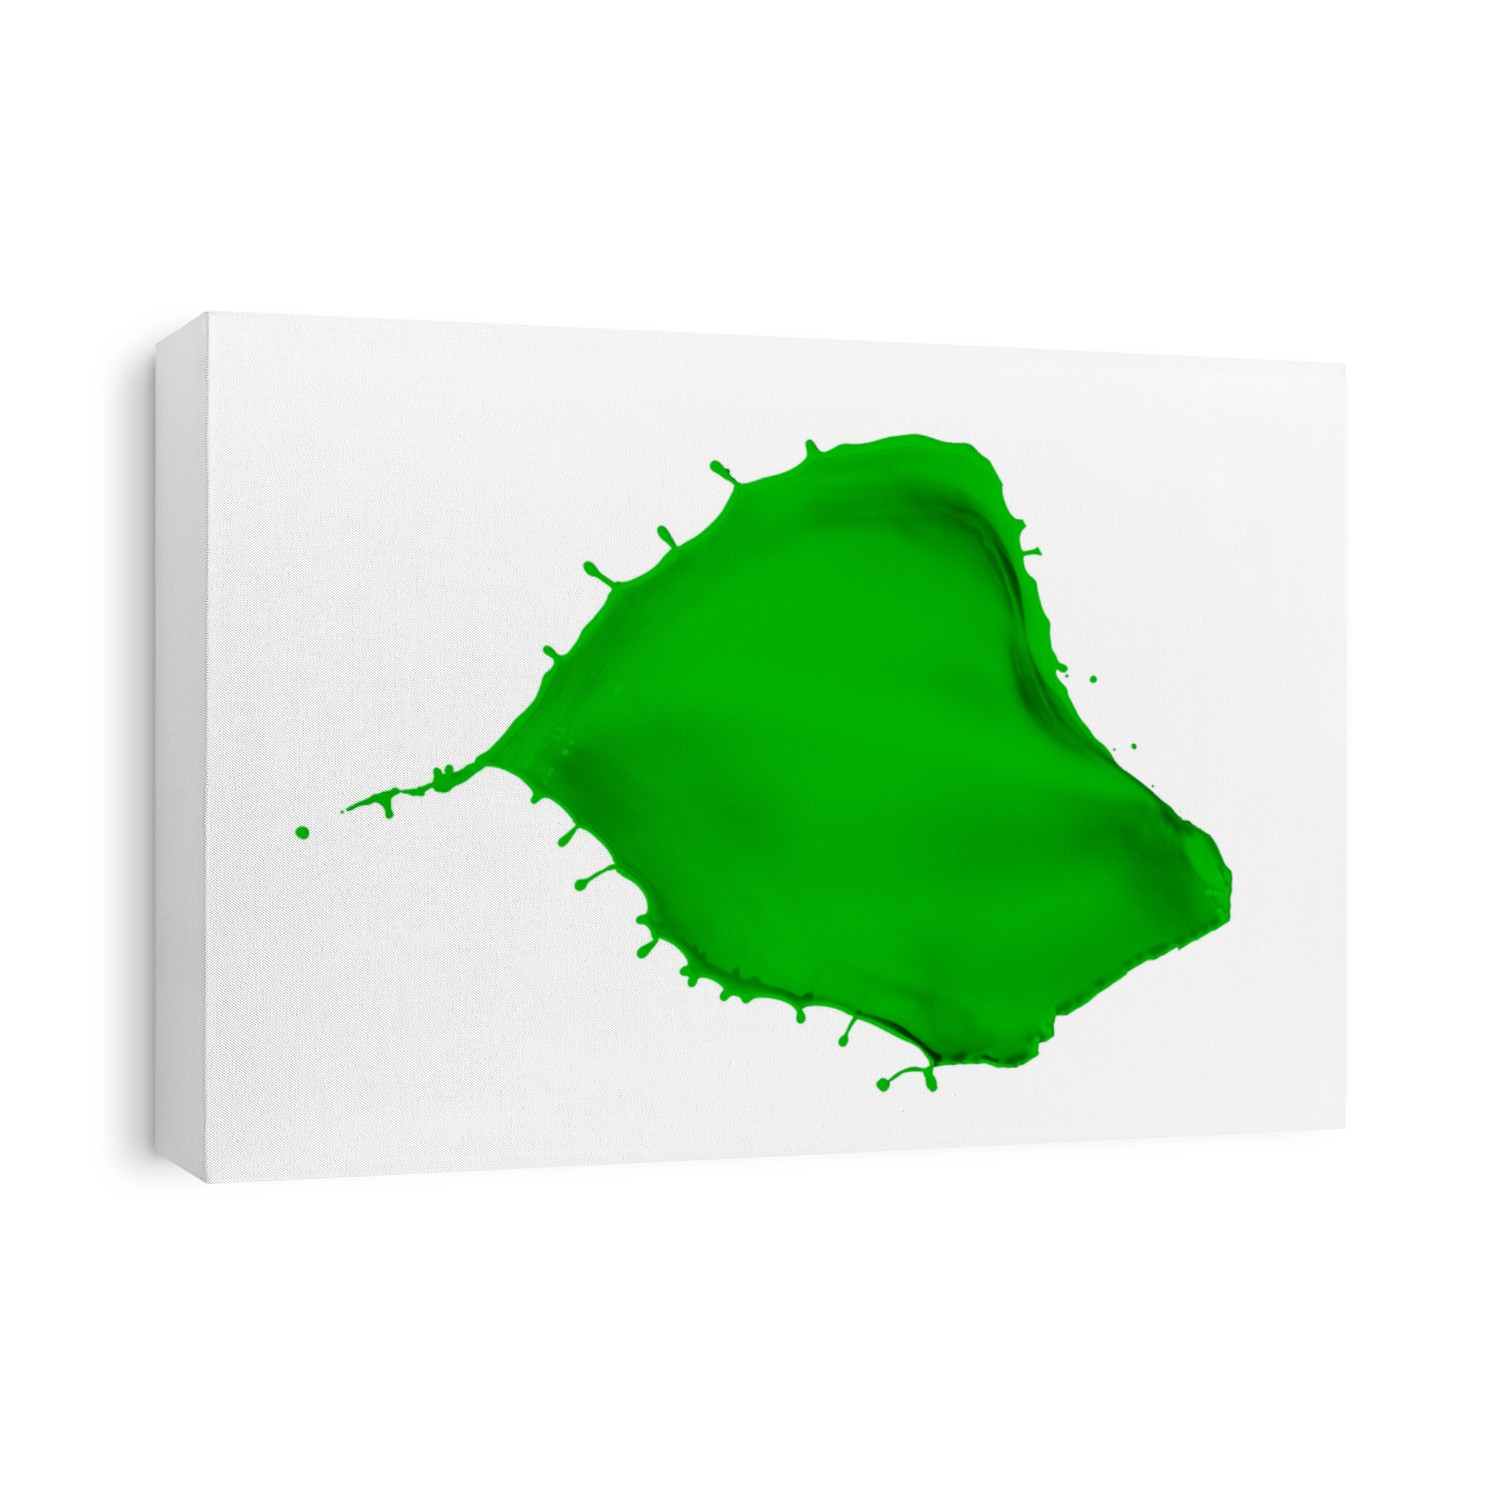 green paint splash isolated on white background